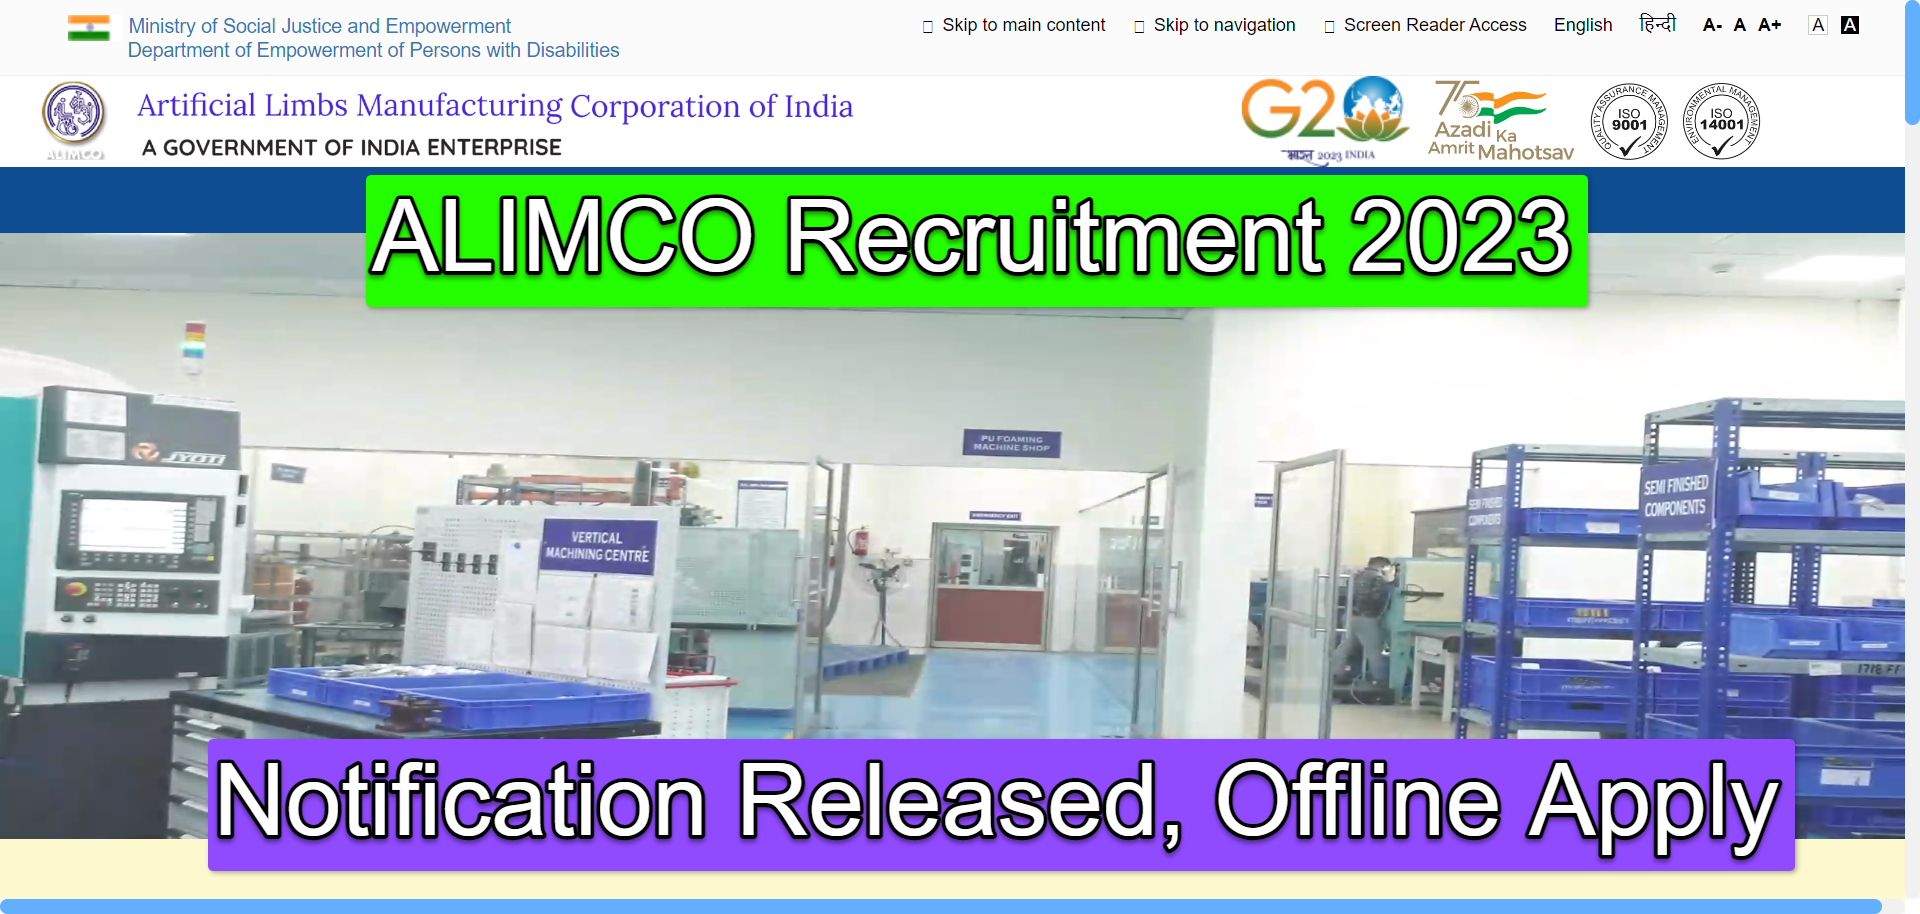 ALIMCO Recruitment 2023 | Notification Released, Offline Apply